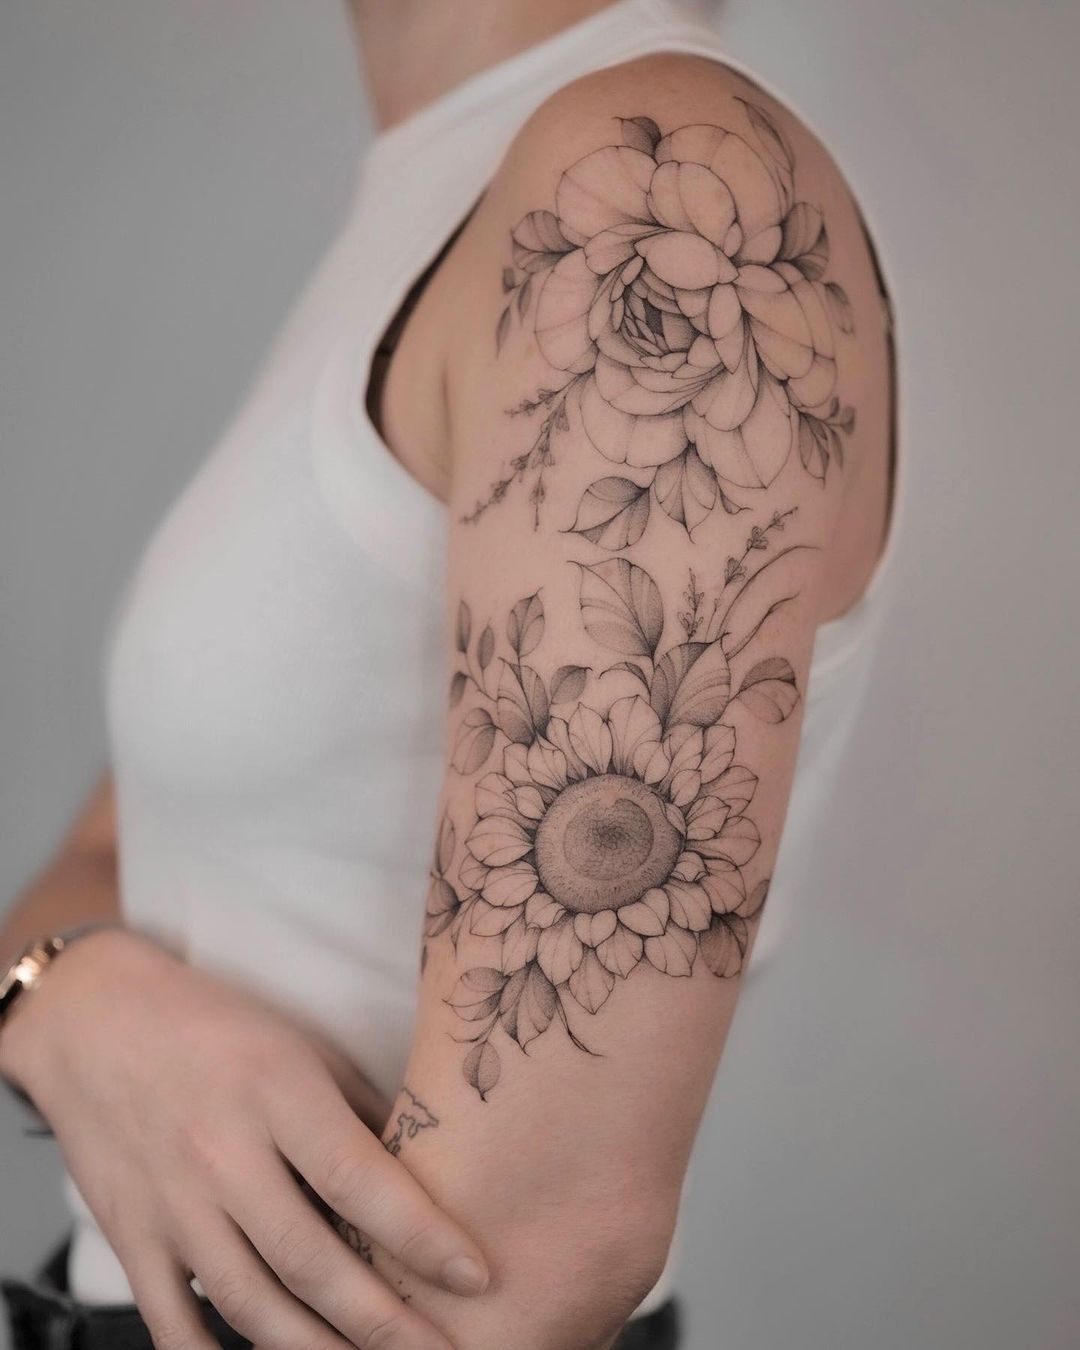 Black and grey sunflower tattoo by asya.tattoo